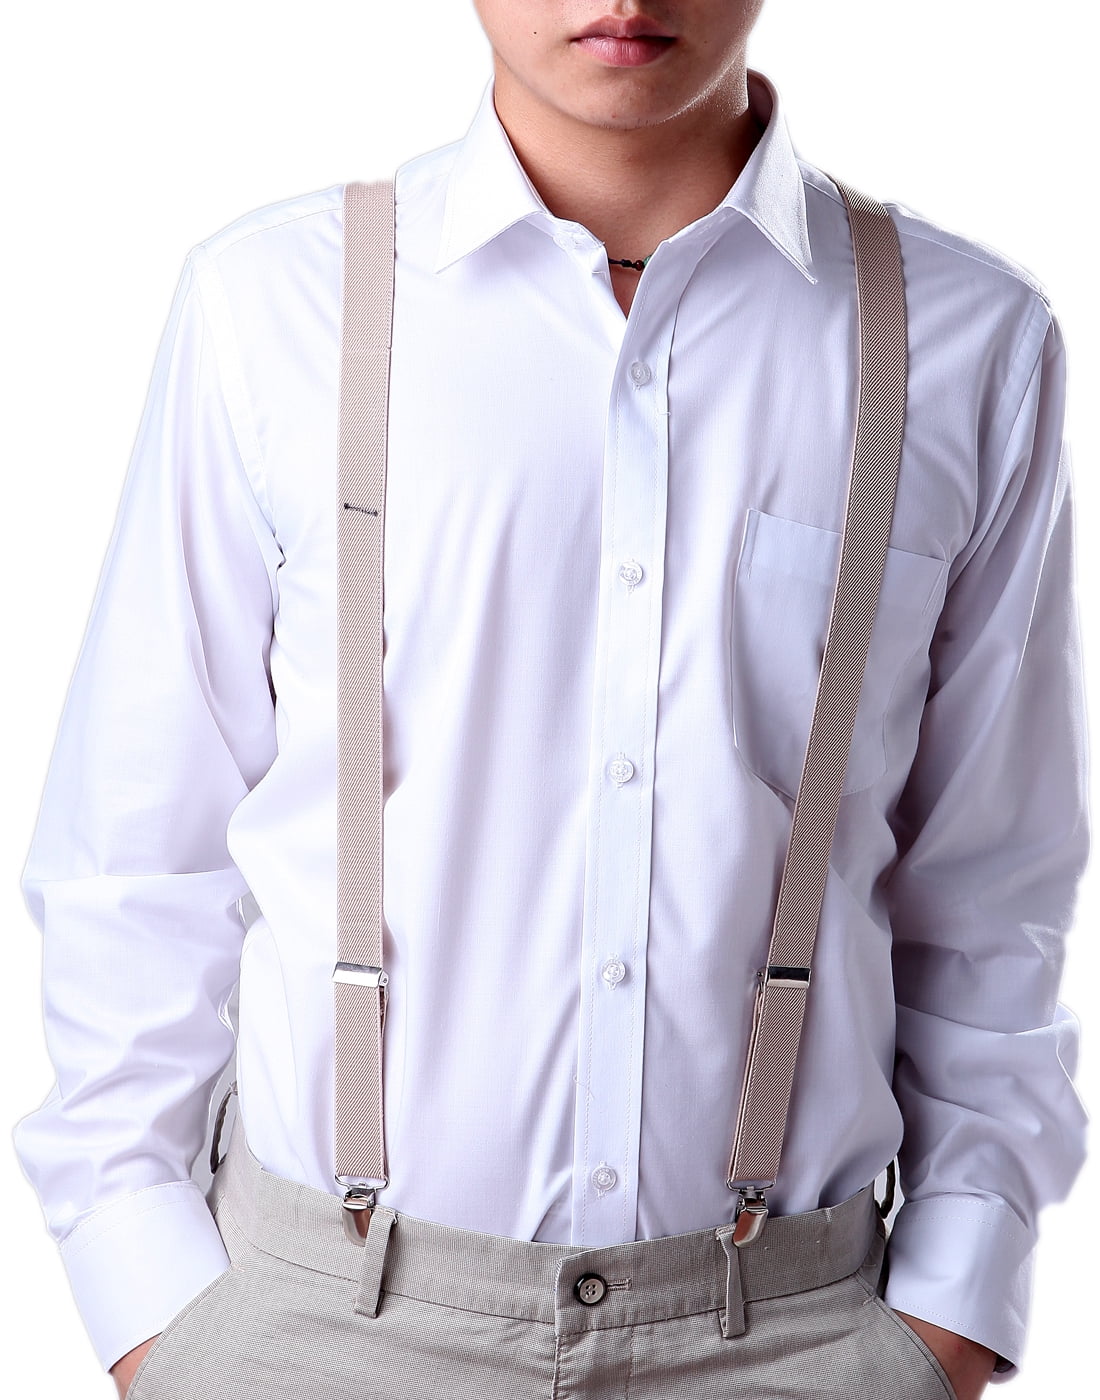 Mens Women Suspenders 1 Inch Elastic Adjustable Y-Back Clip-on Suspender Braces Beige